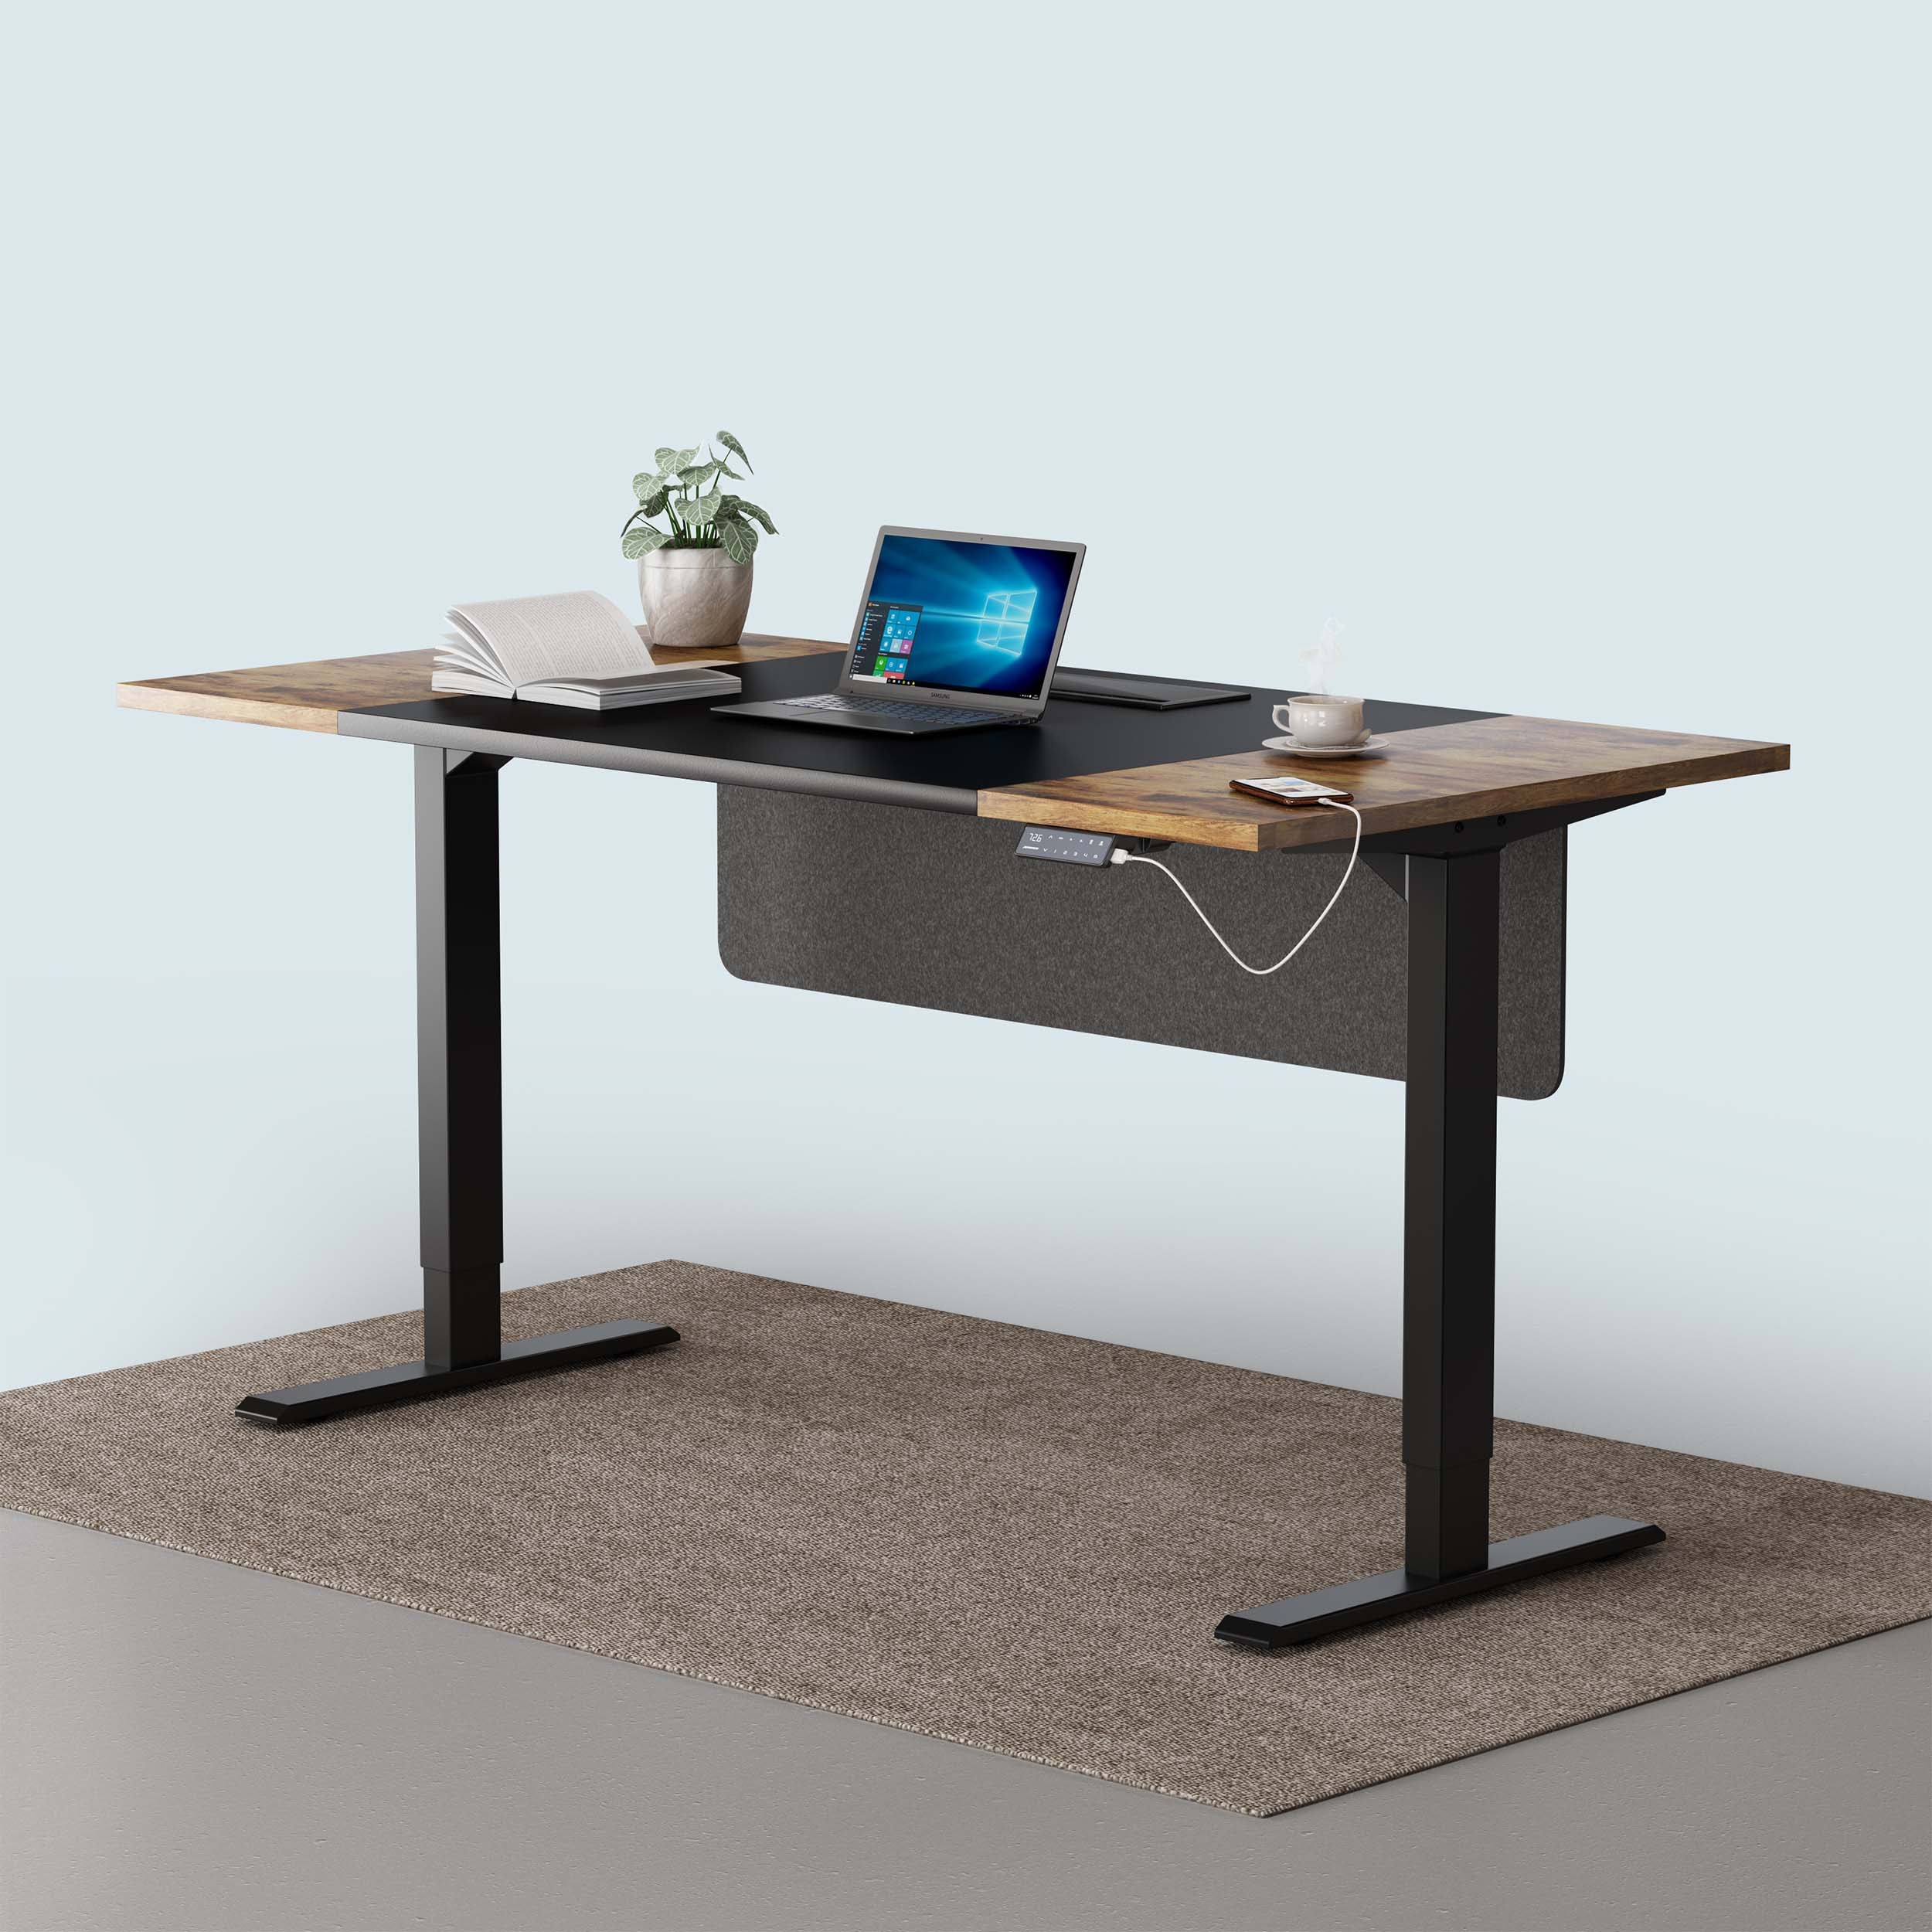 Maidesite SC1 large size 160cm black height adjustable desk for home office